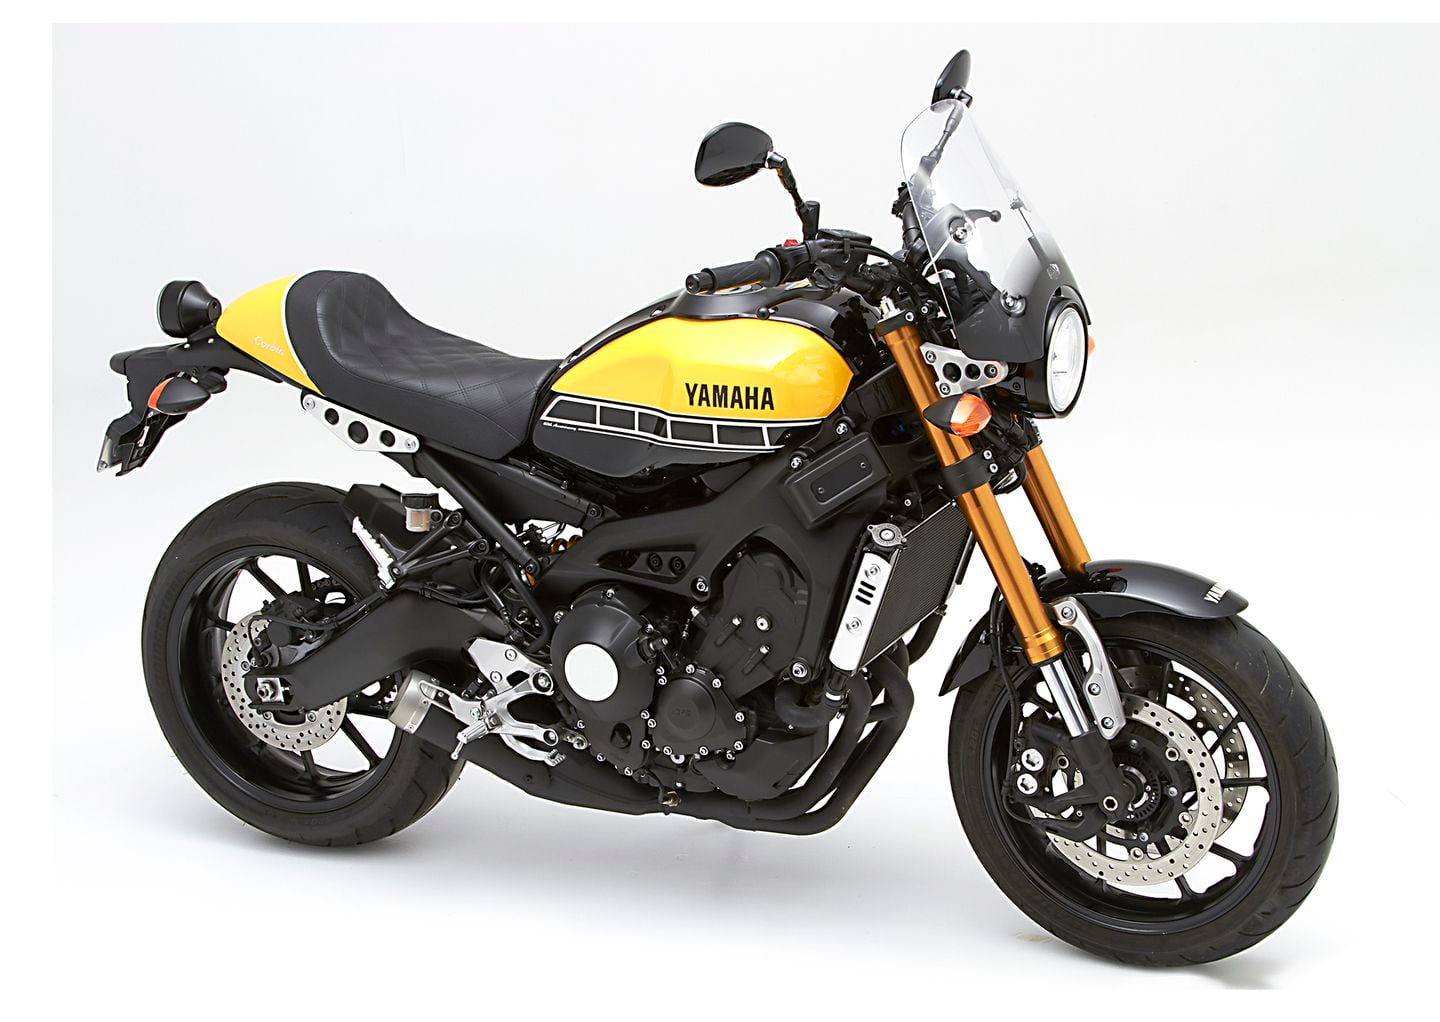 New Corbin Seats for the Yamaha XSR900 Motorcyclist